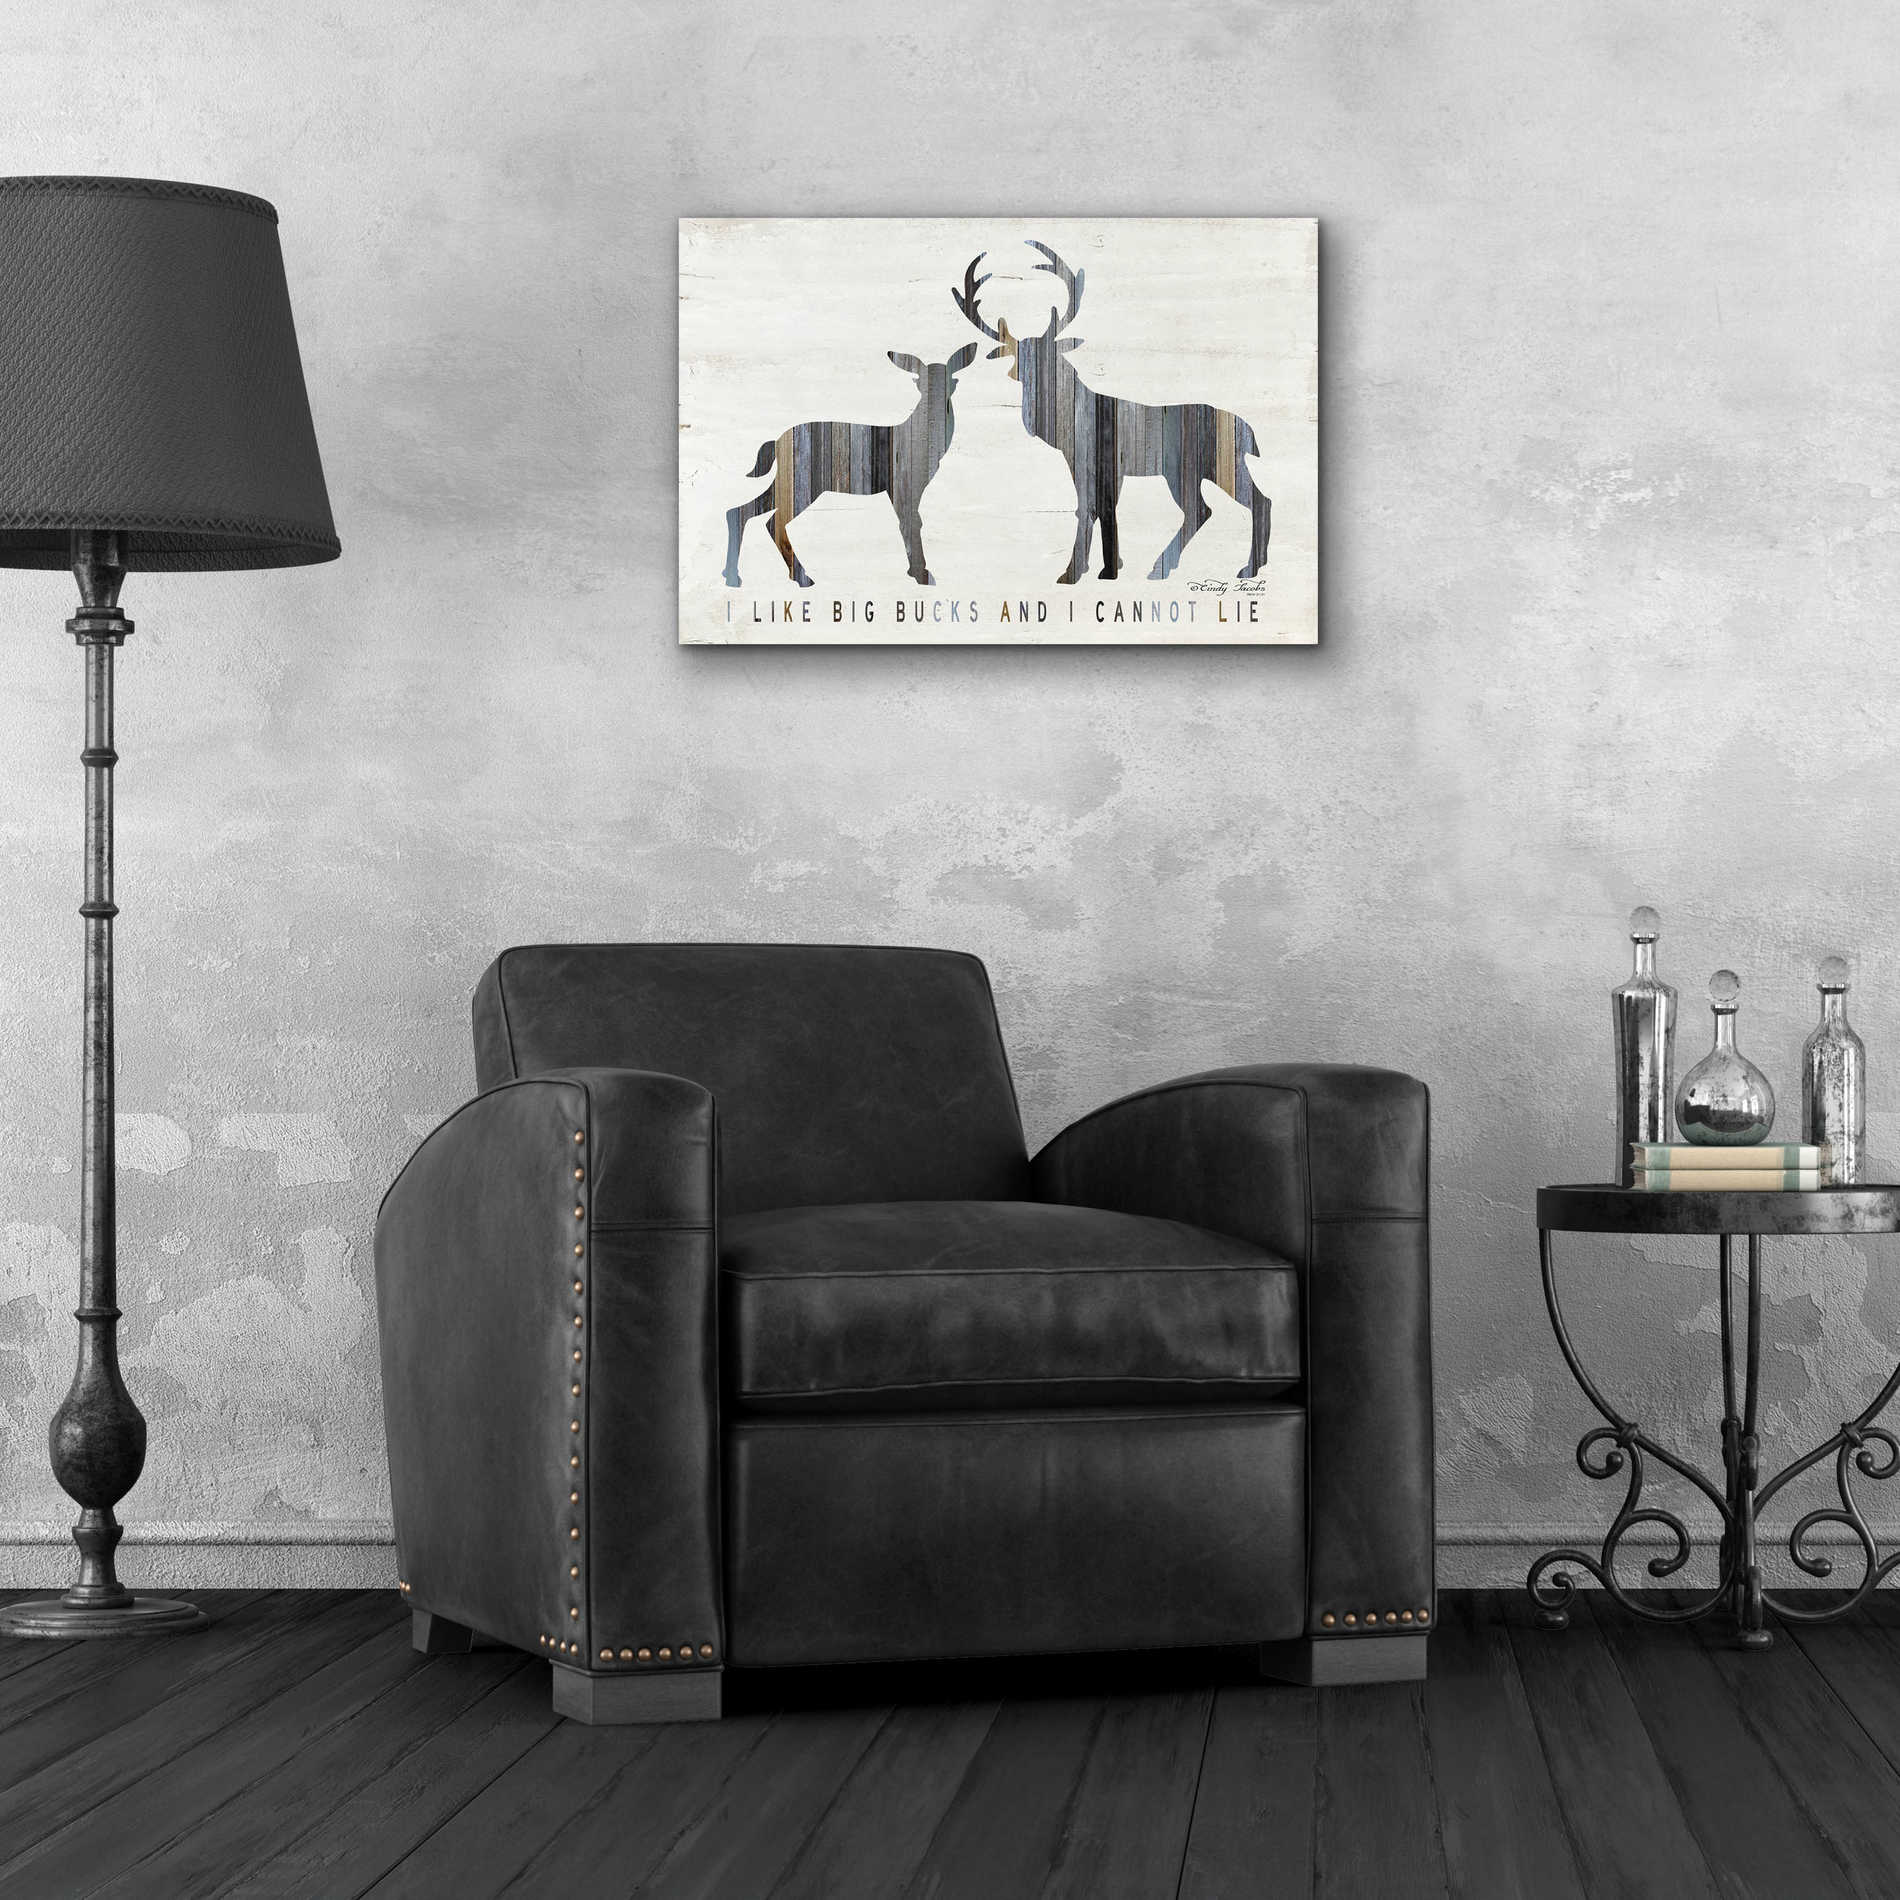 Epic Art 'I Like Big Bucks' by Cindy Jacobs, Acrylic Glass Wall Art,24x16